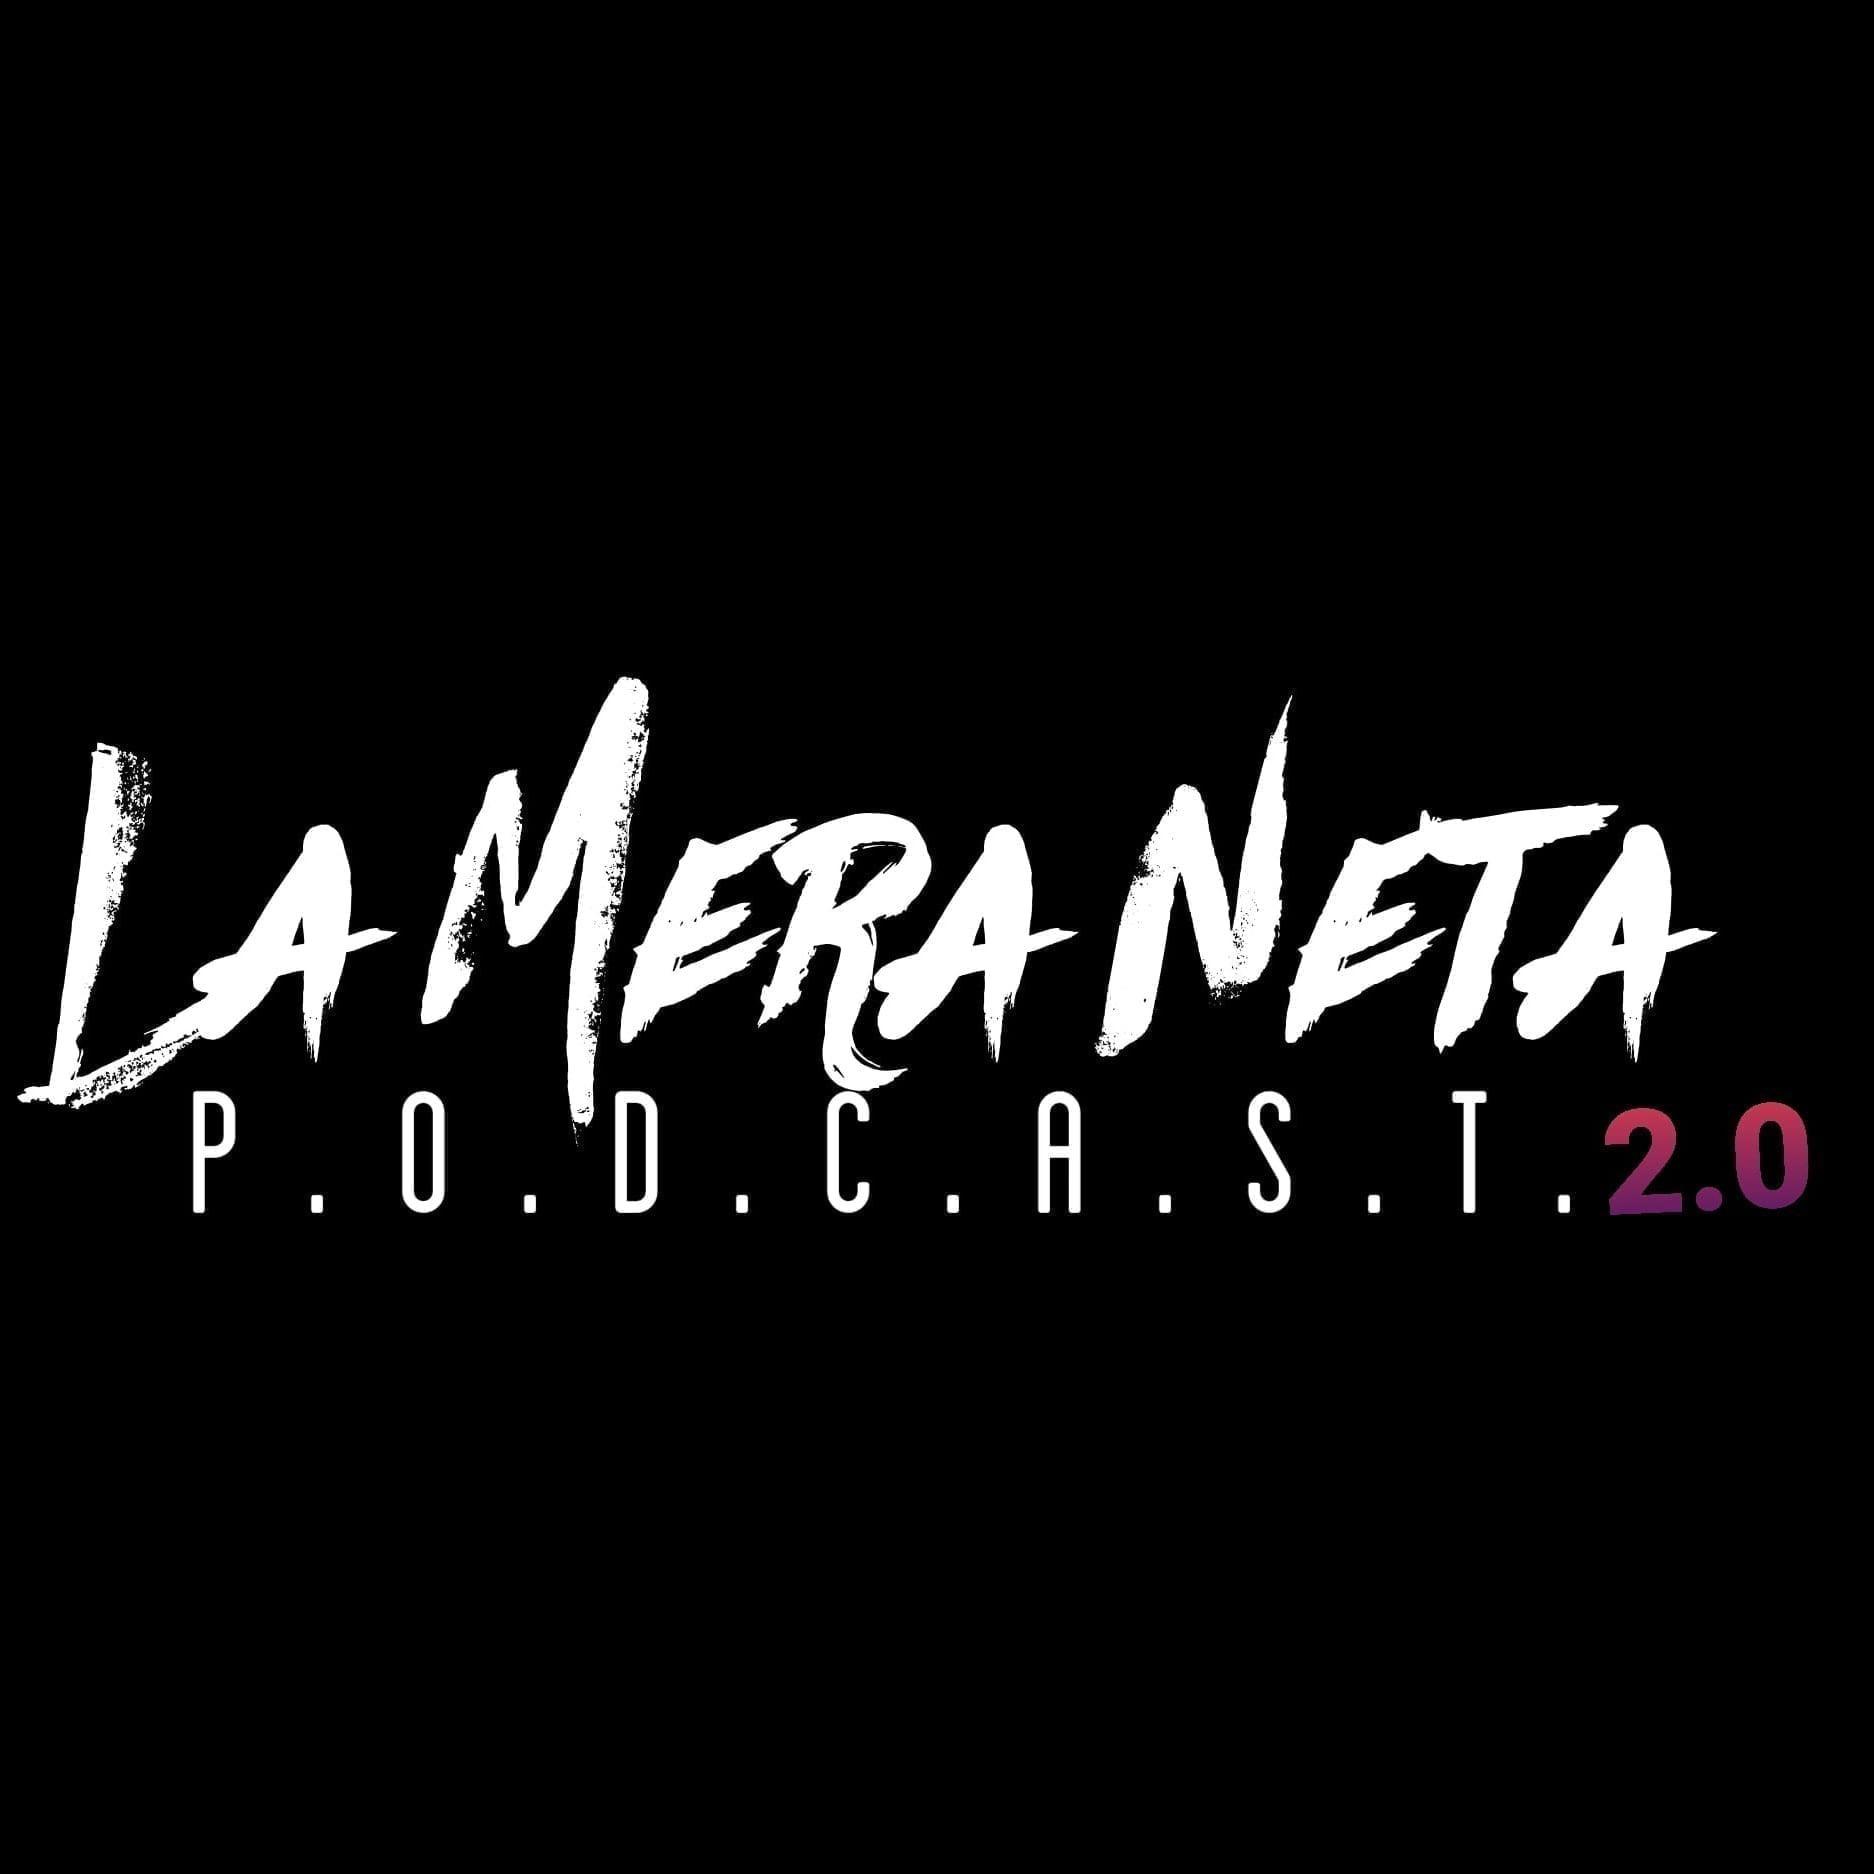 LaMeraNetaPodcast2.0